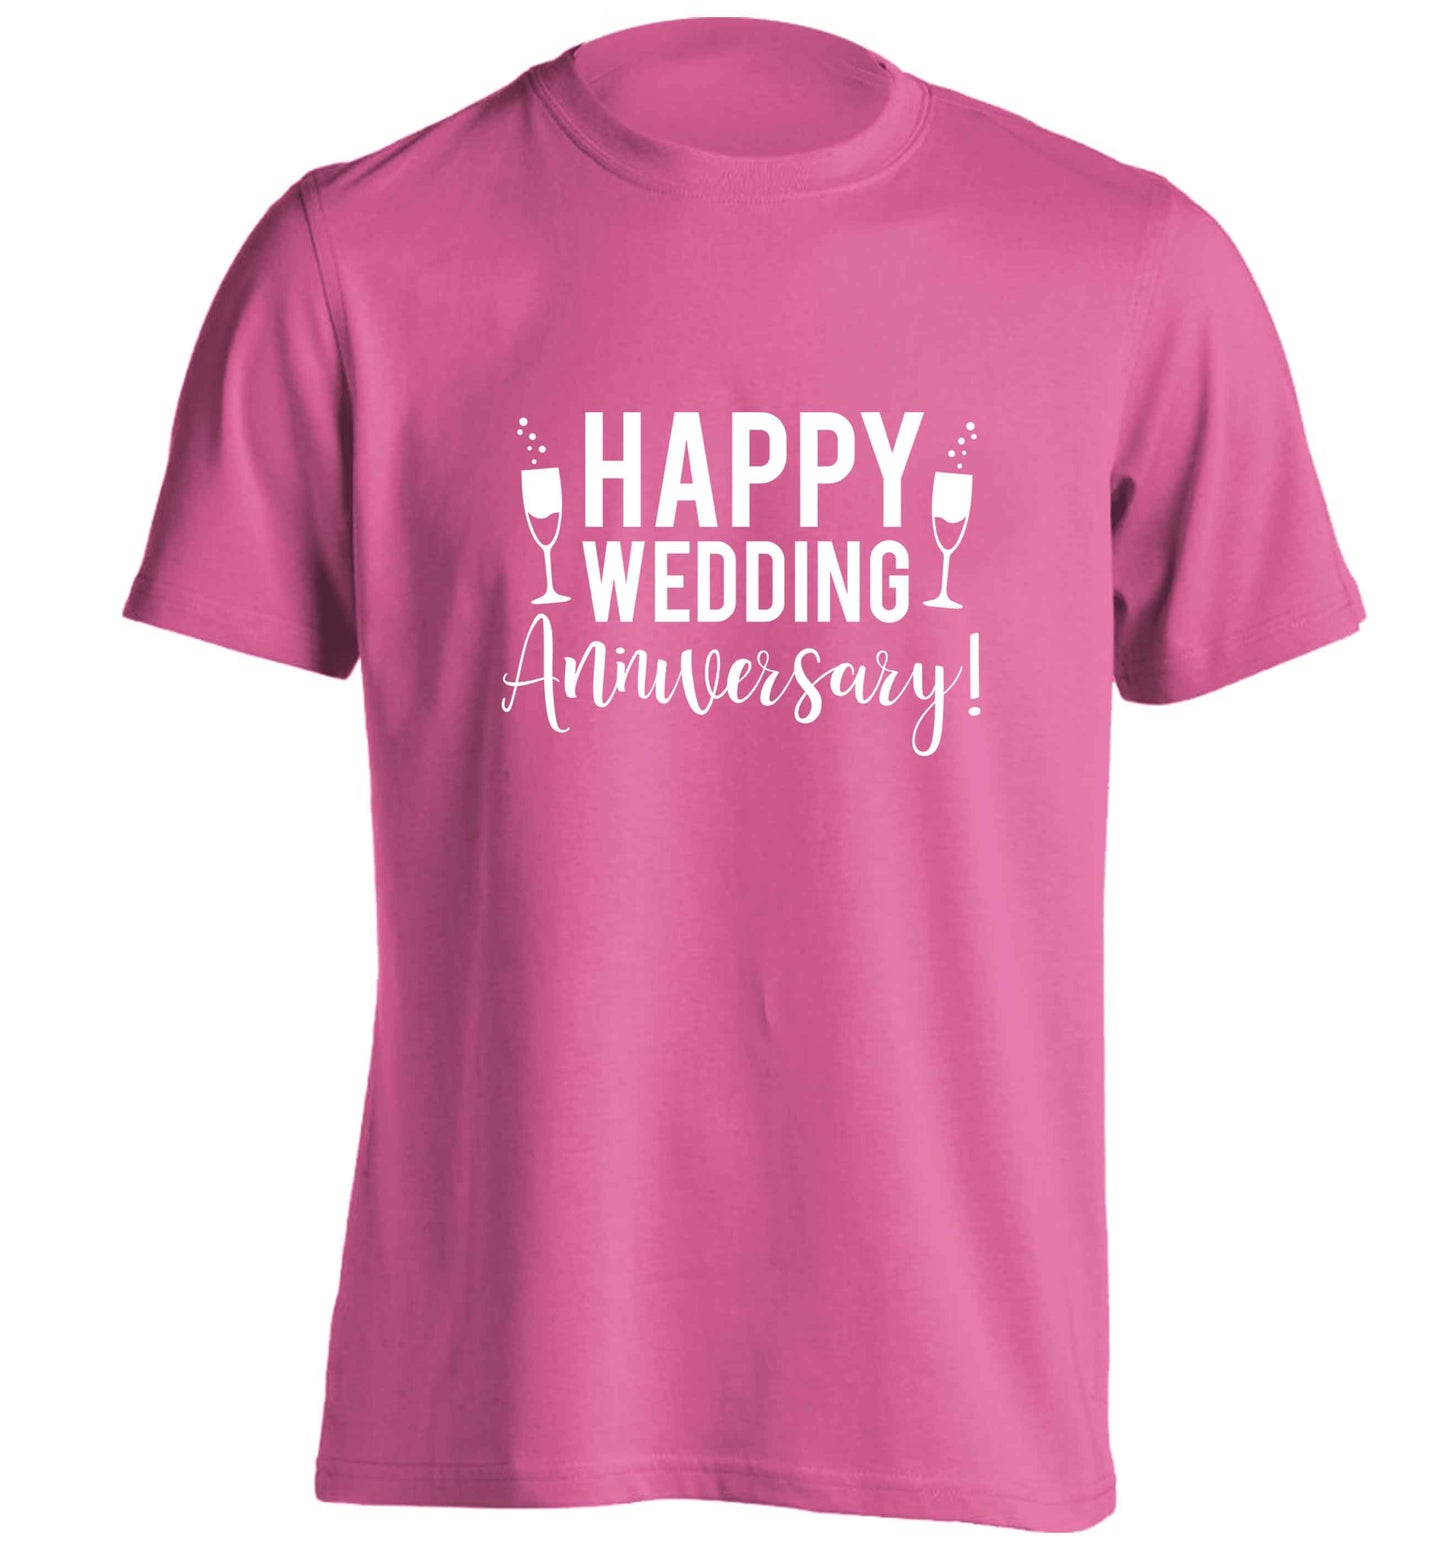 Happy wedding anniversary! adults unisex pink Tshirt 2XL